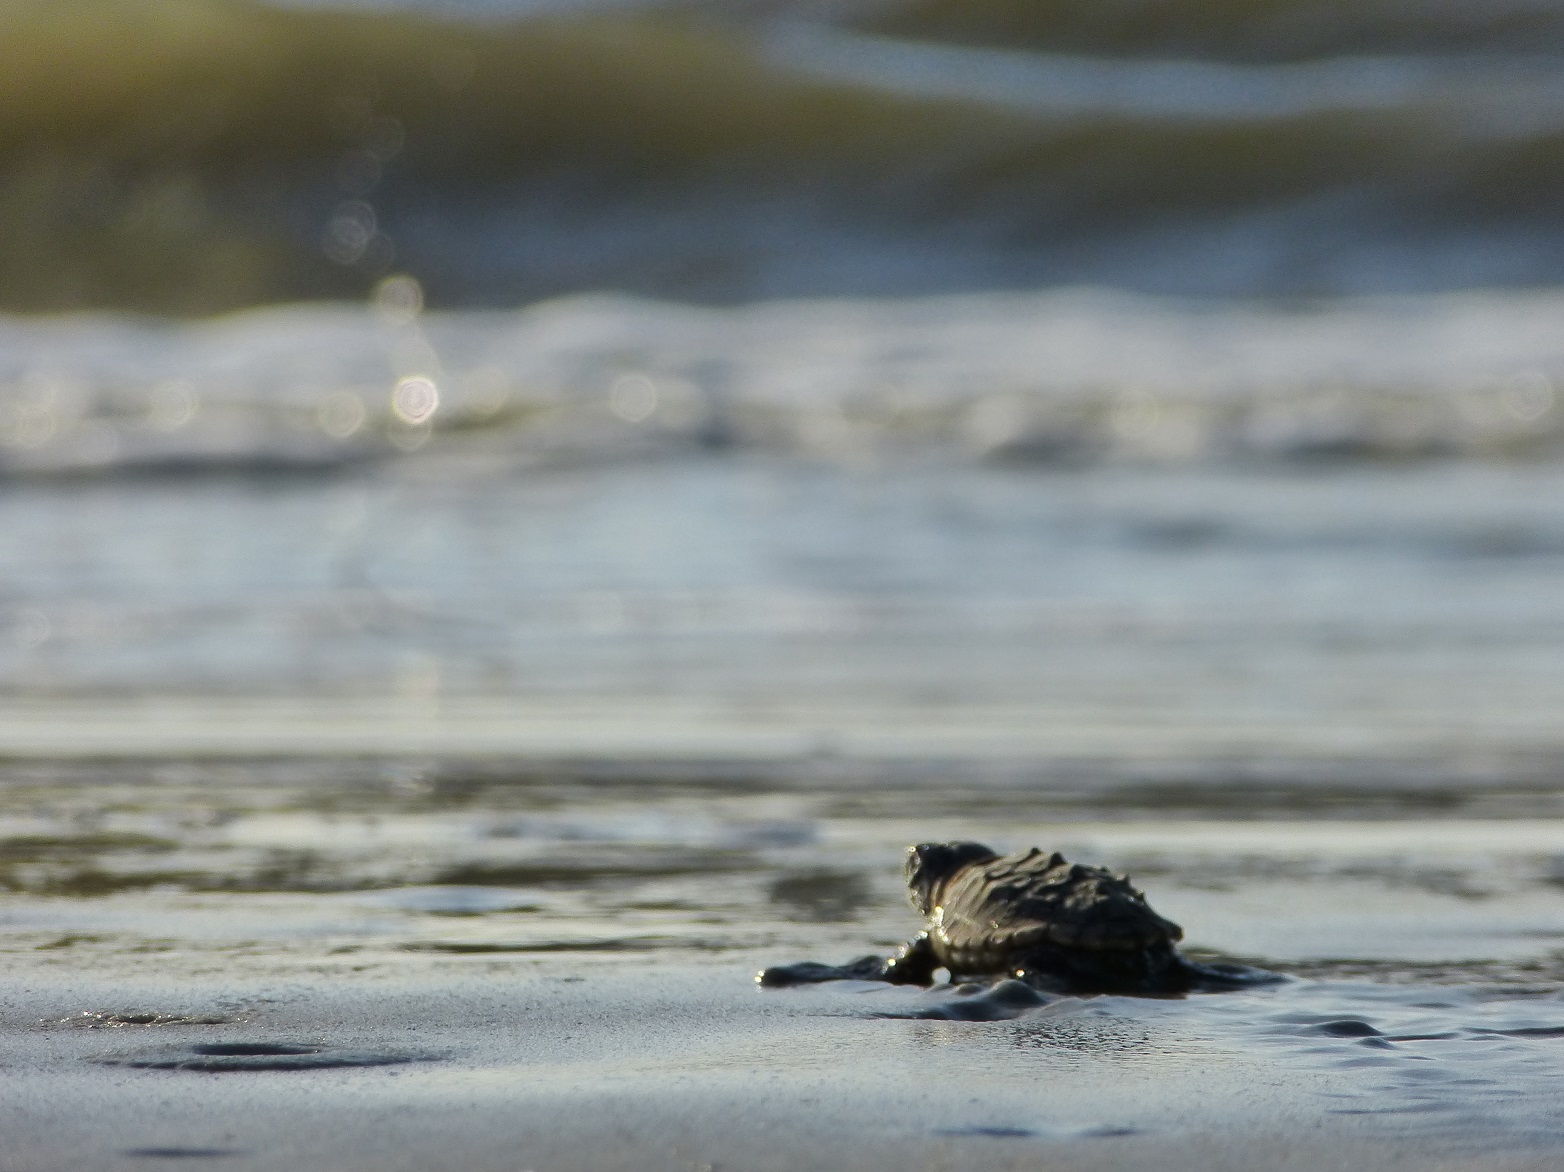 Loggerhead sea turtle hatchling on the beach, moving toward the ocean.